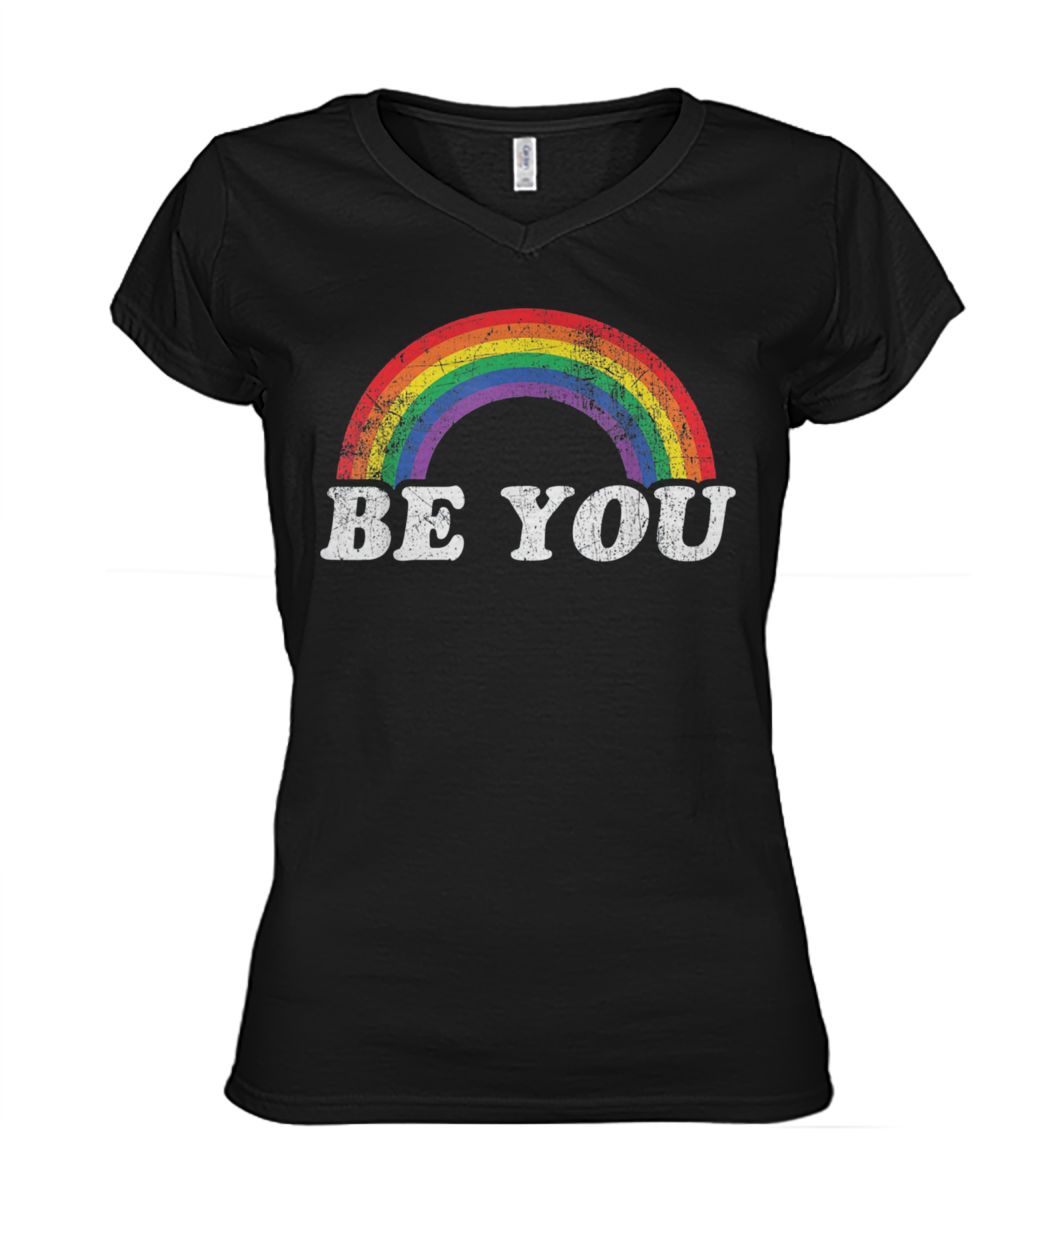 Be you gay LGBT pride rainbow women's v-neck